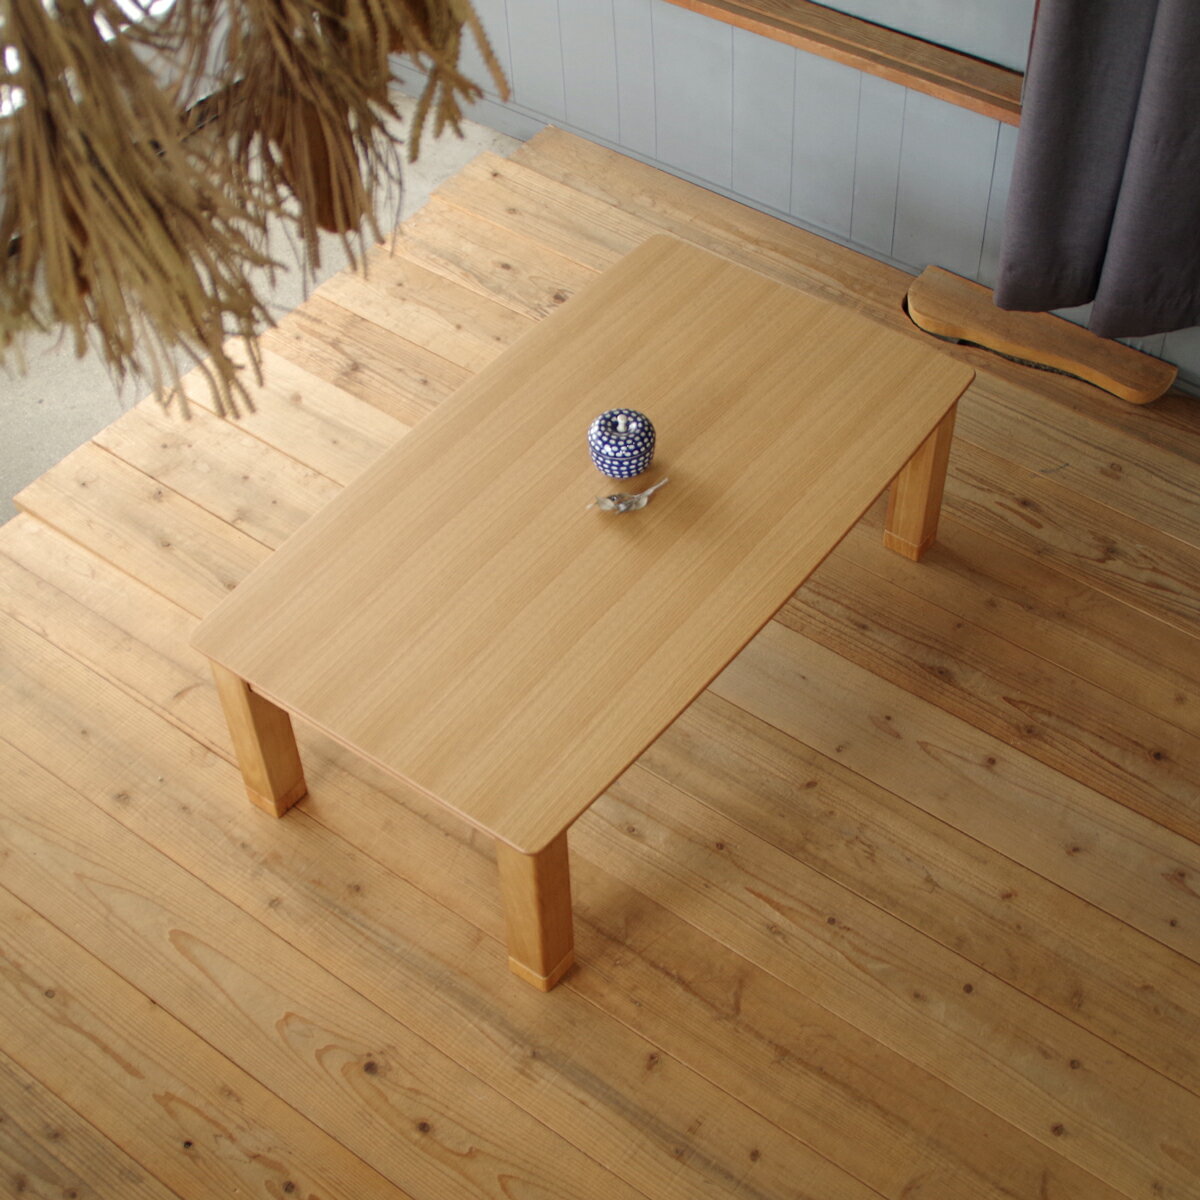 randy-ex こたつ テーブル 120 長方形 ナラ突板|北欧|和風|モダン|シンプル|デザイン||おしゃれ|かわいい||日本製|座卓|コタツ||国産ローテーブル|ローテーブル|机|